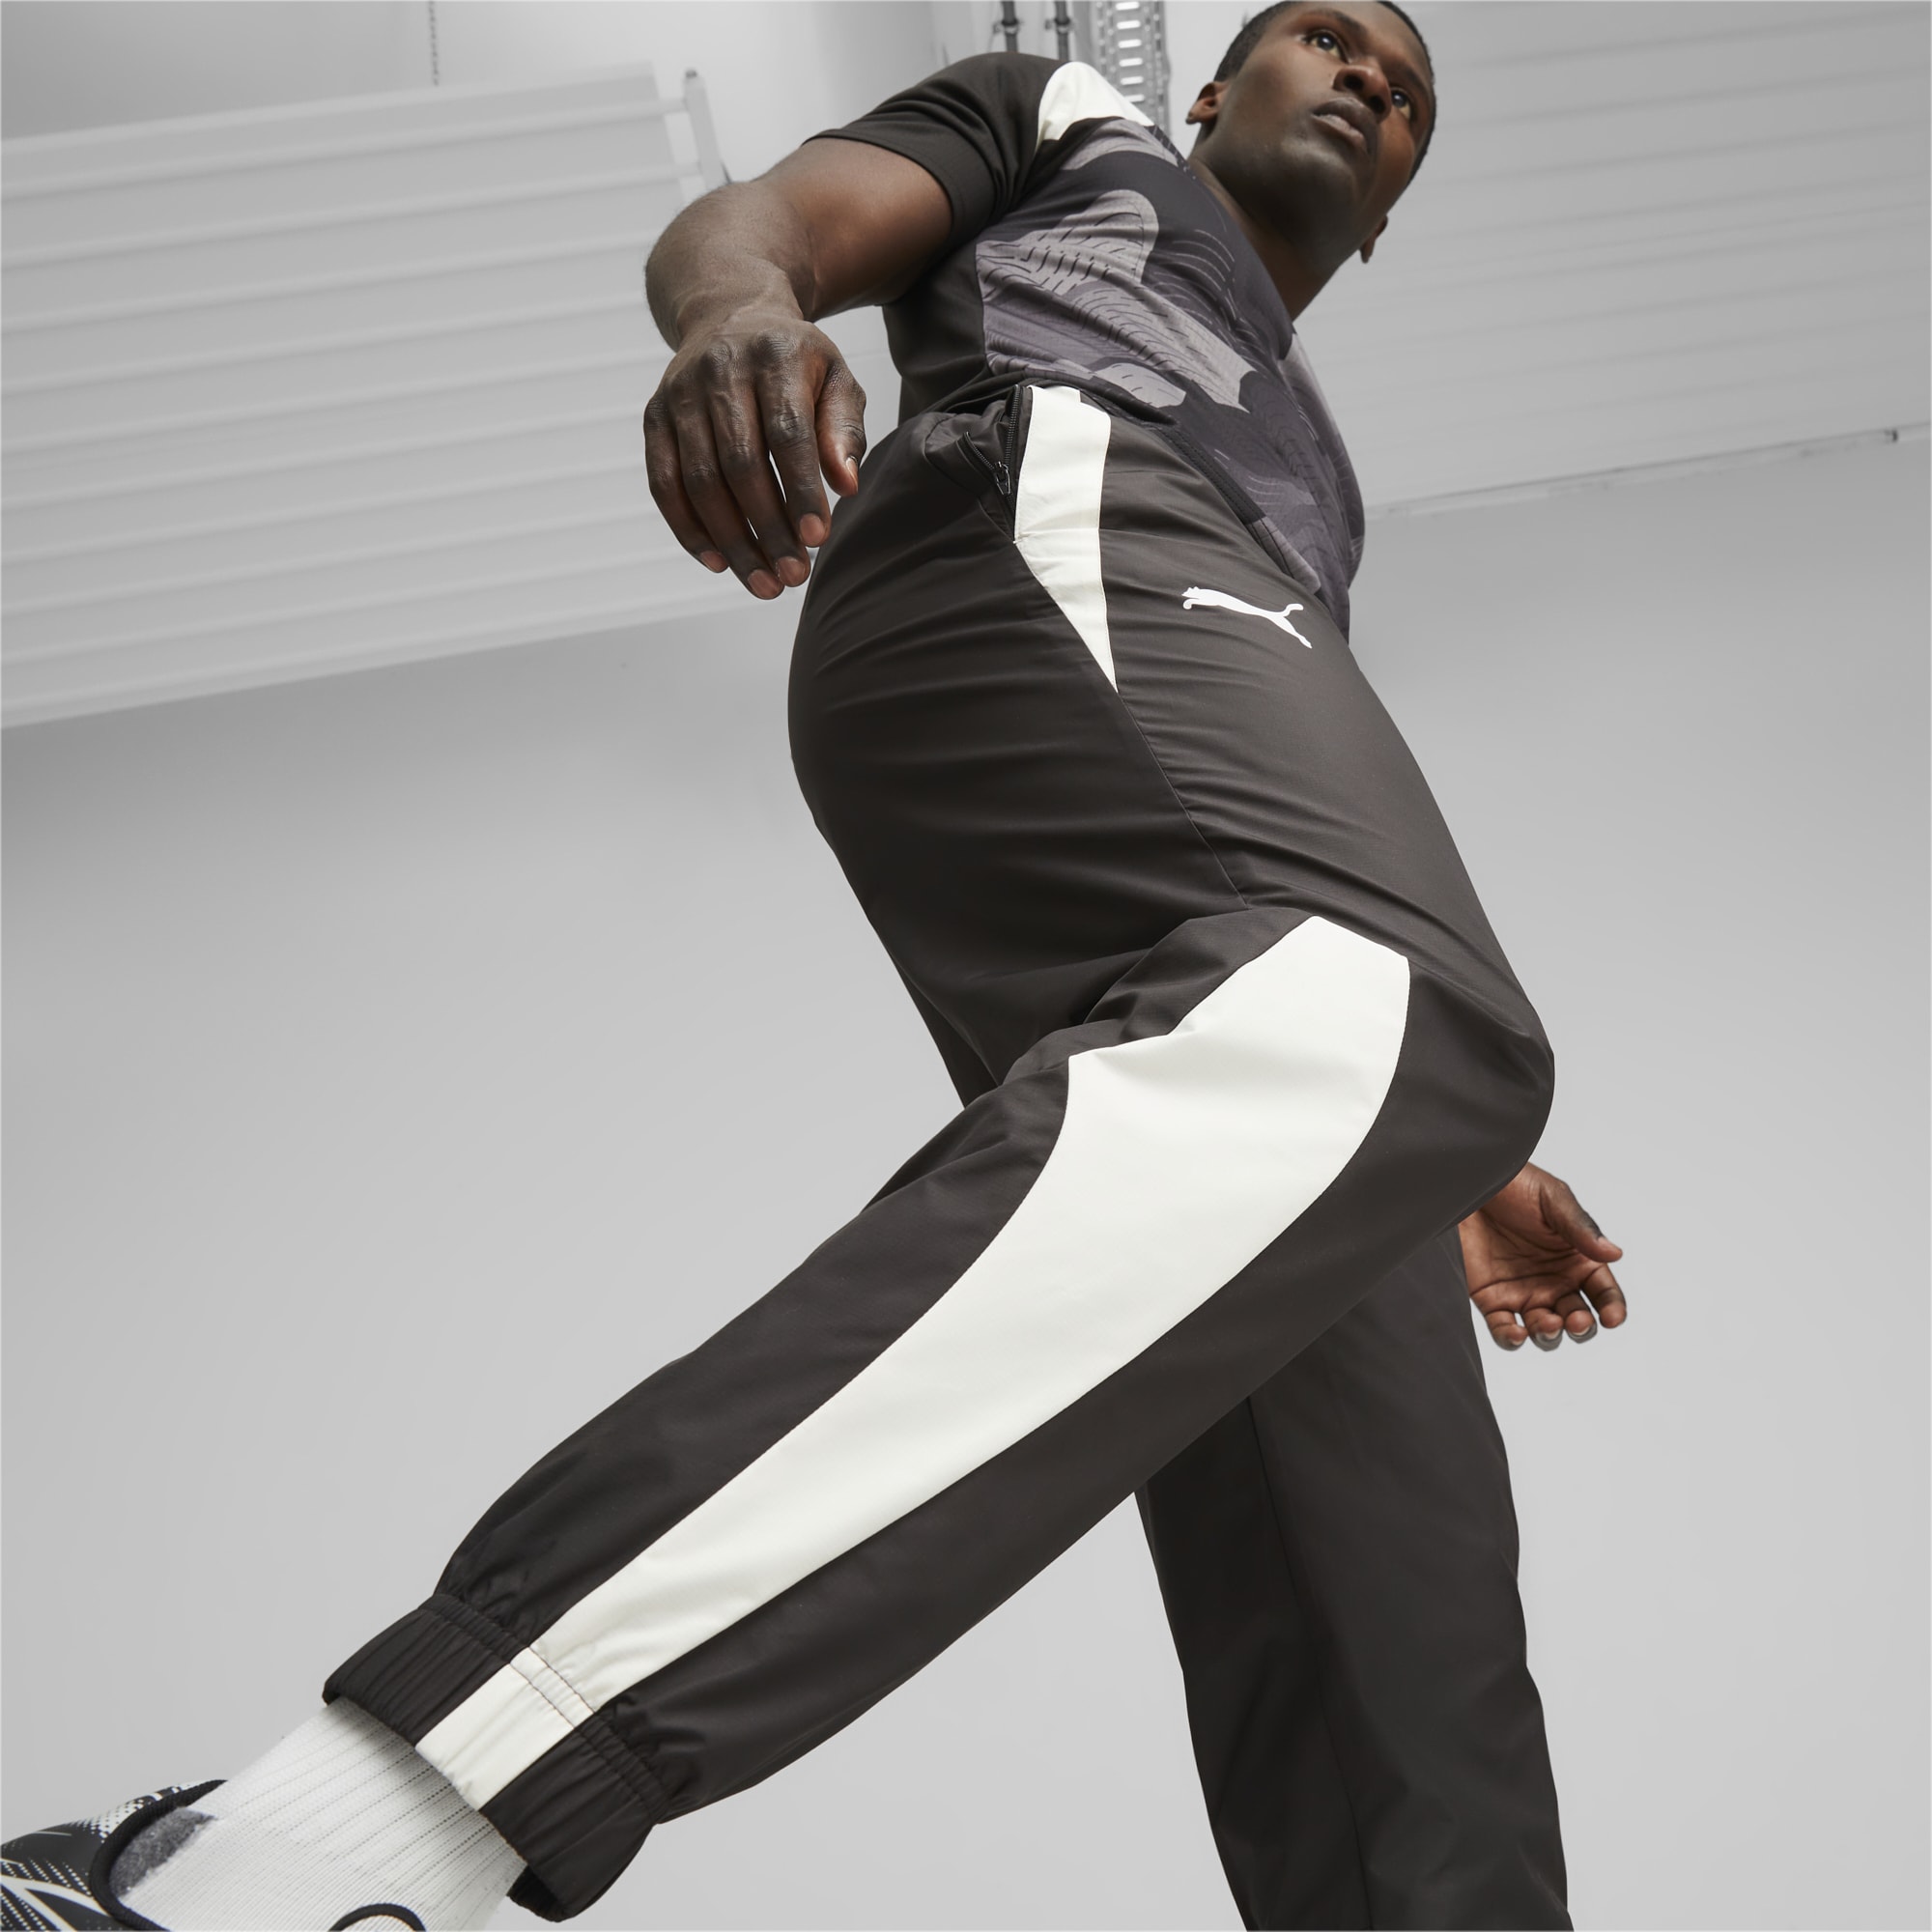 Men's PUMA Olympique De Marseille Prematch Football Pants, Black/Flat Dark Grey, Size S, Clothing